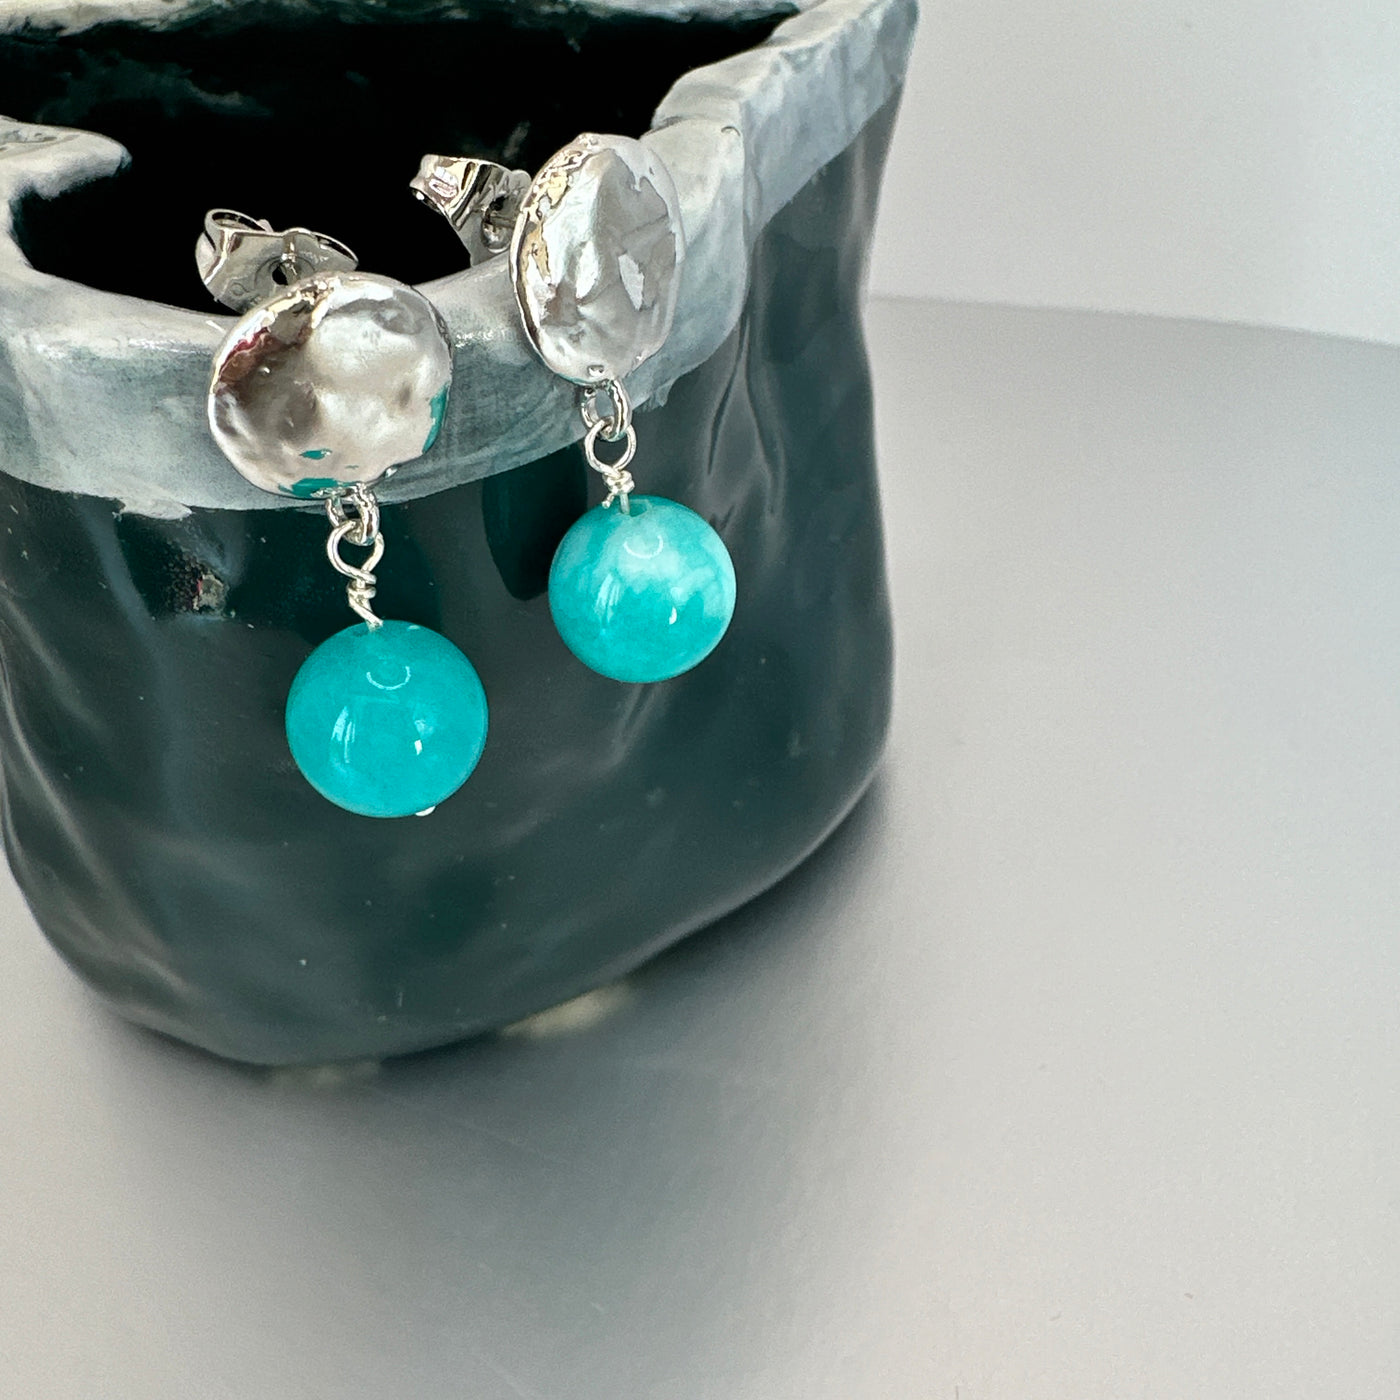 Brass earrings with aqua giada pearls